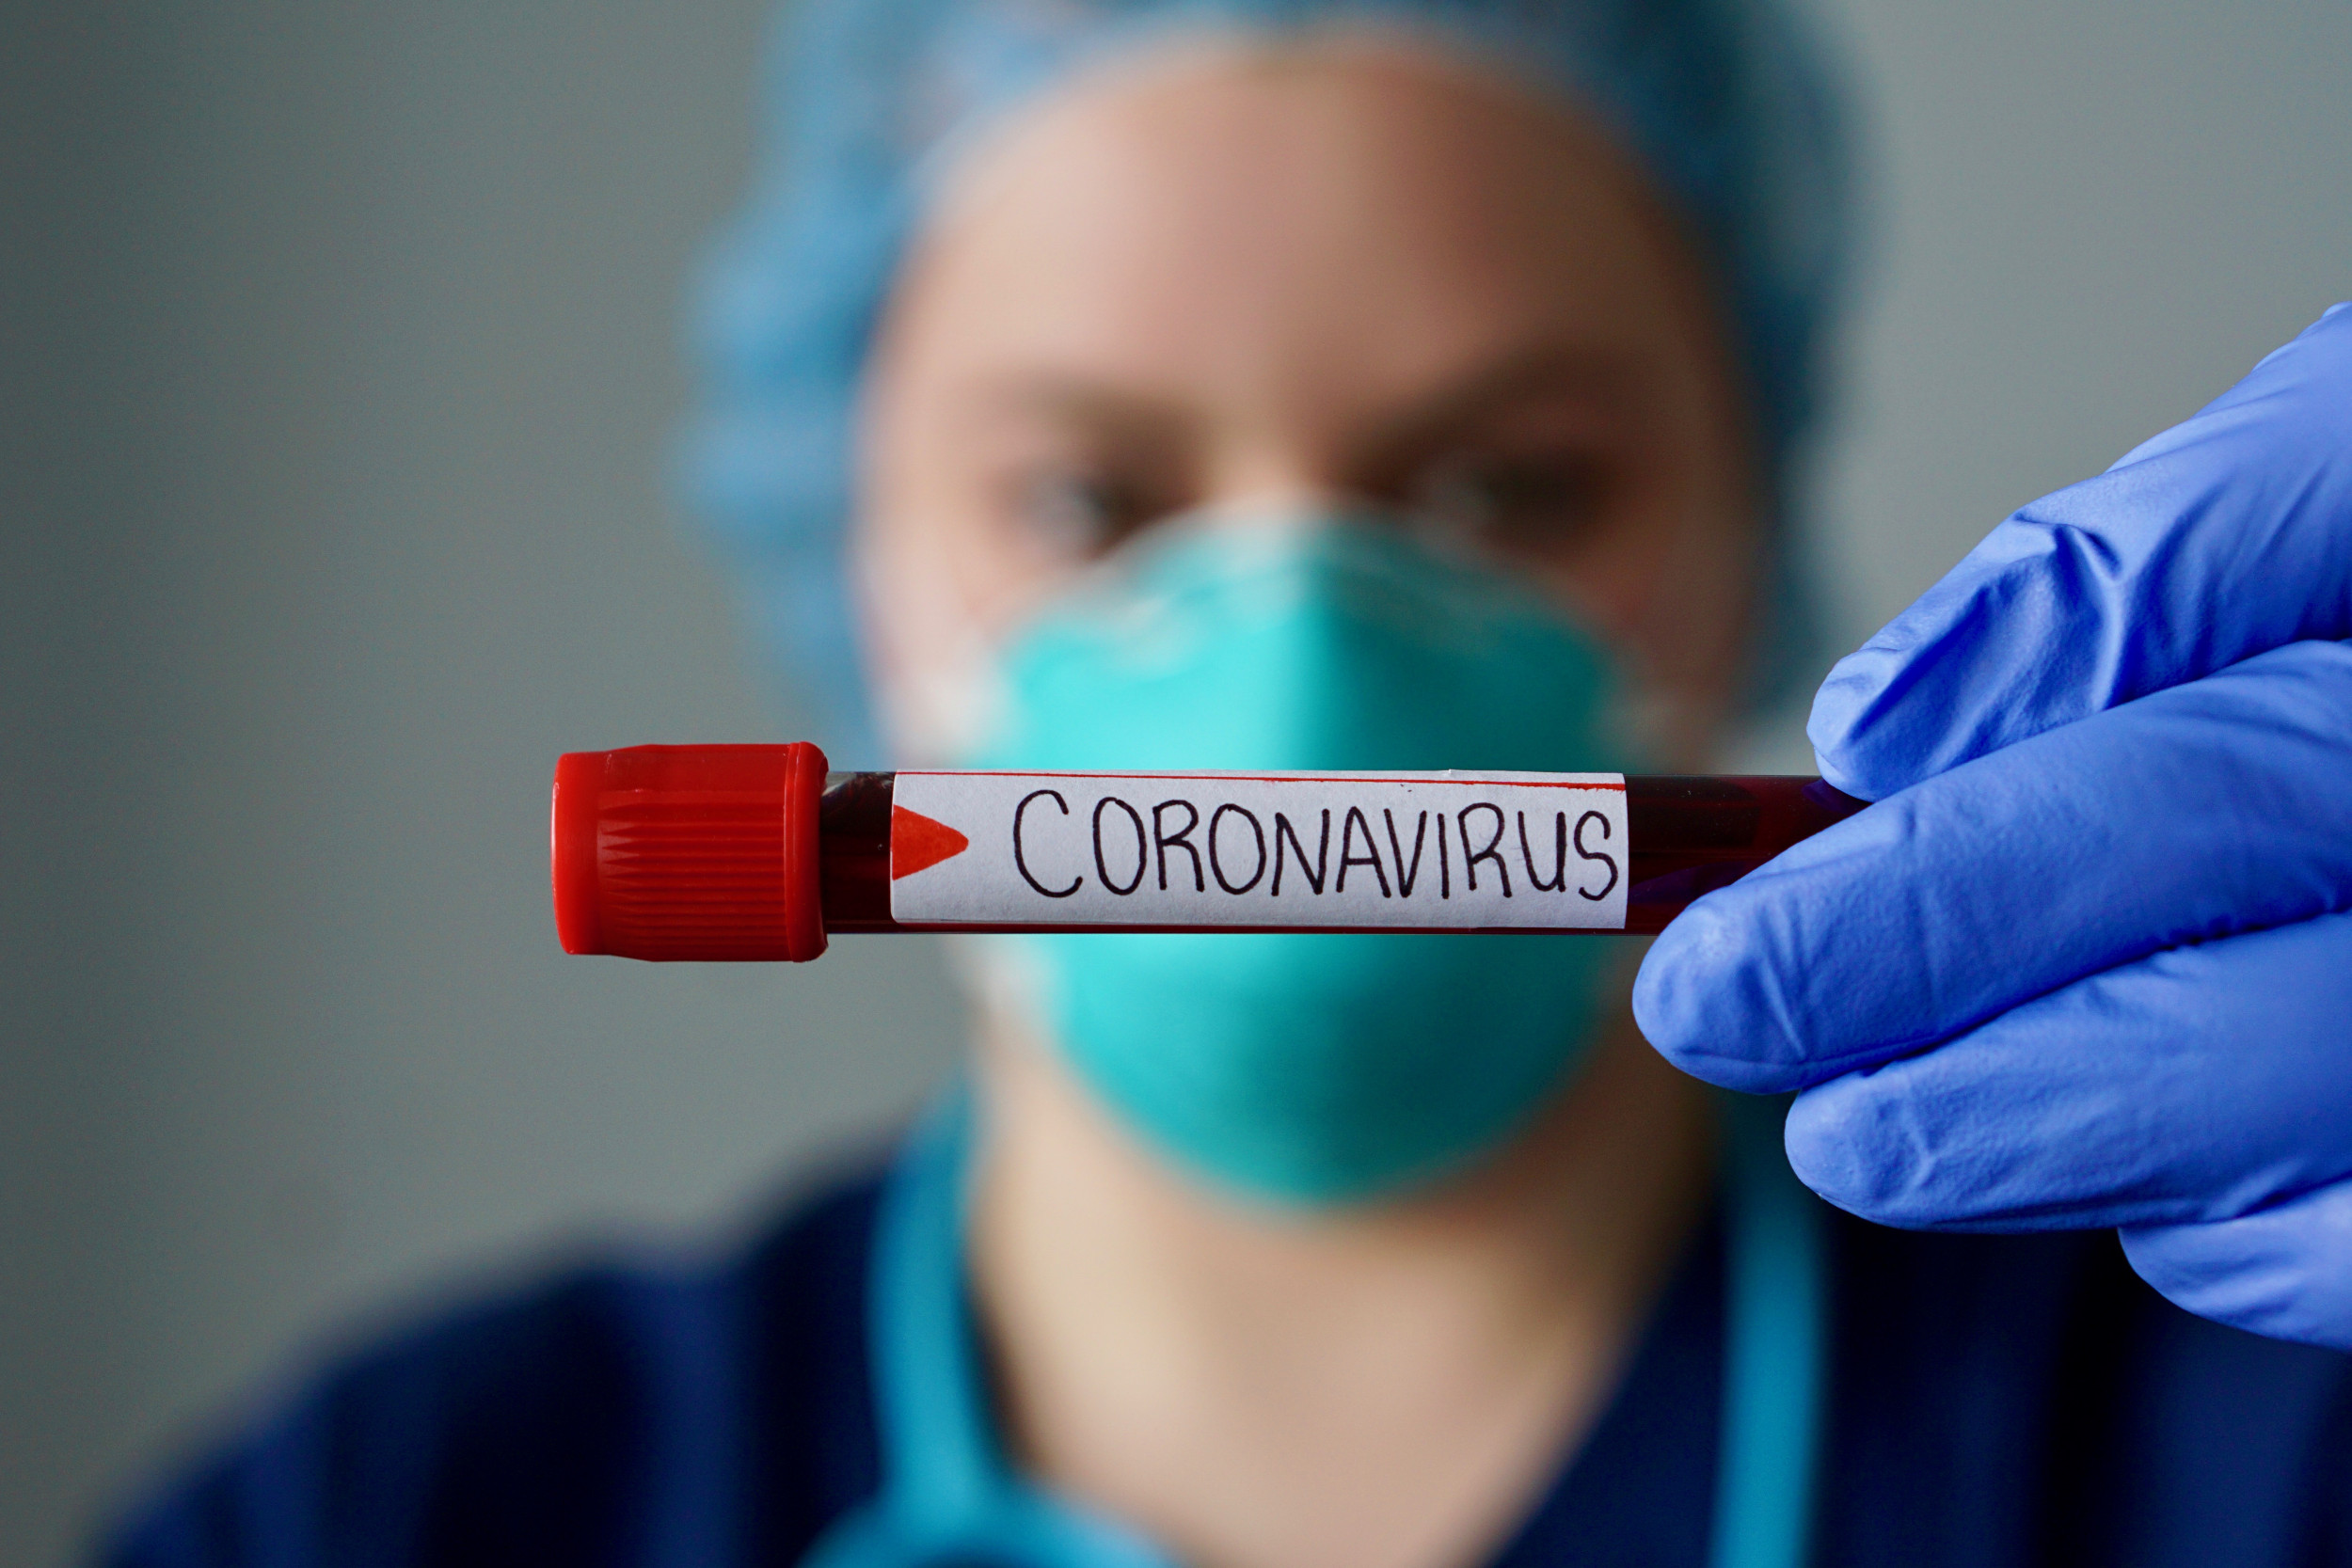 MLB, Fanatics provide masks in coronavirus fight